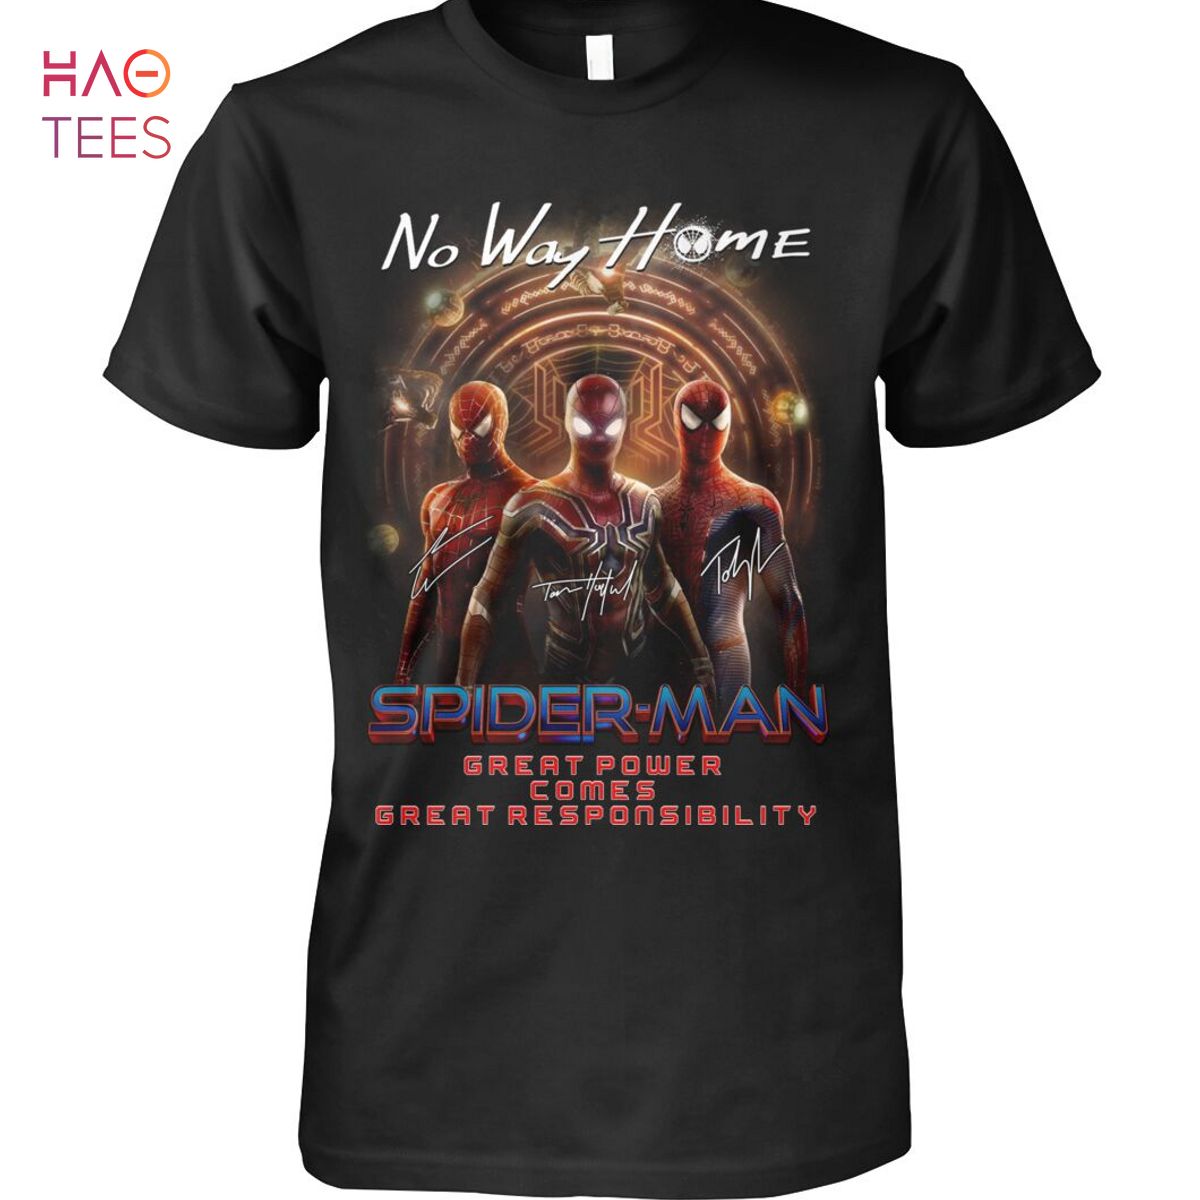 HOT No Way Home Spider-Man Shirt